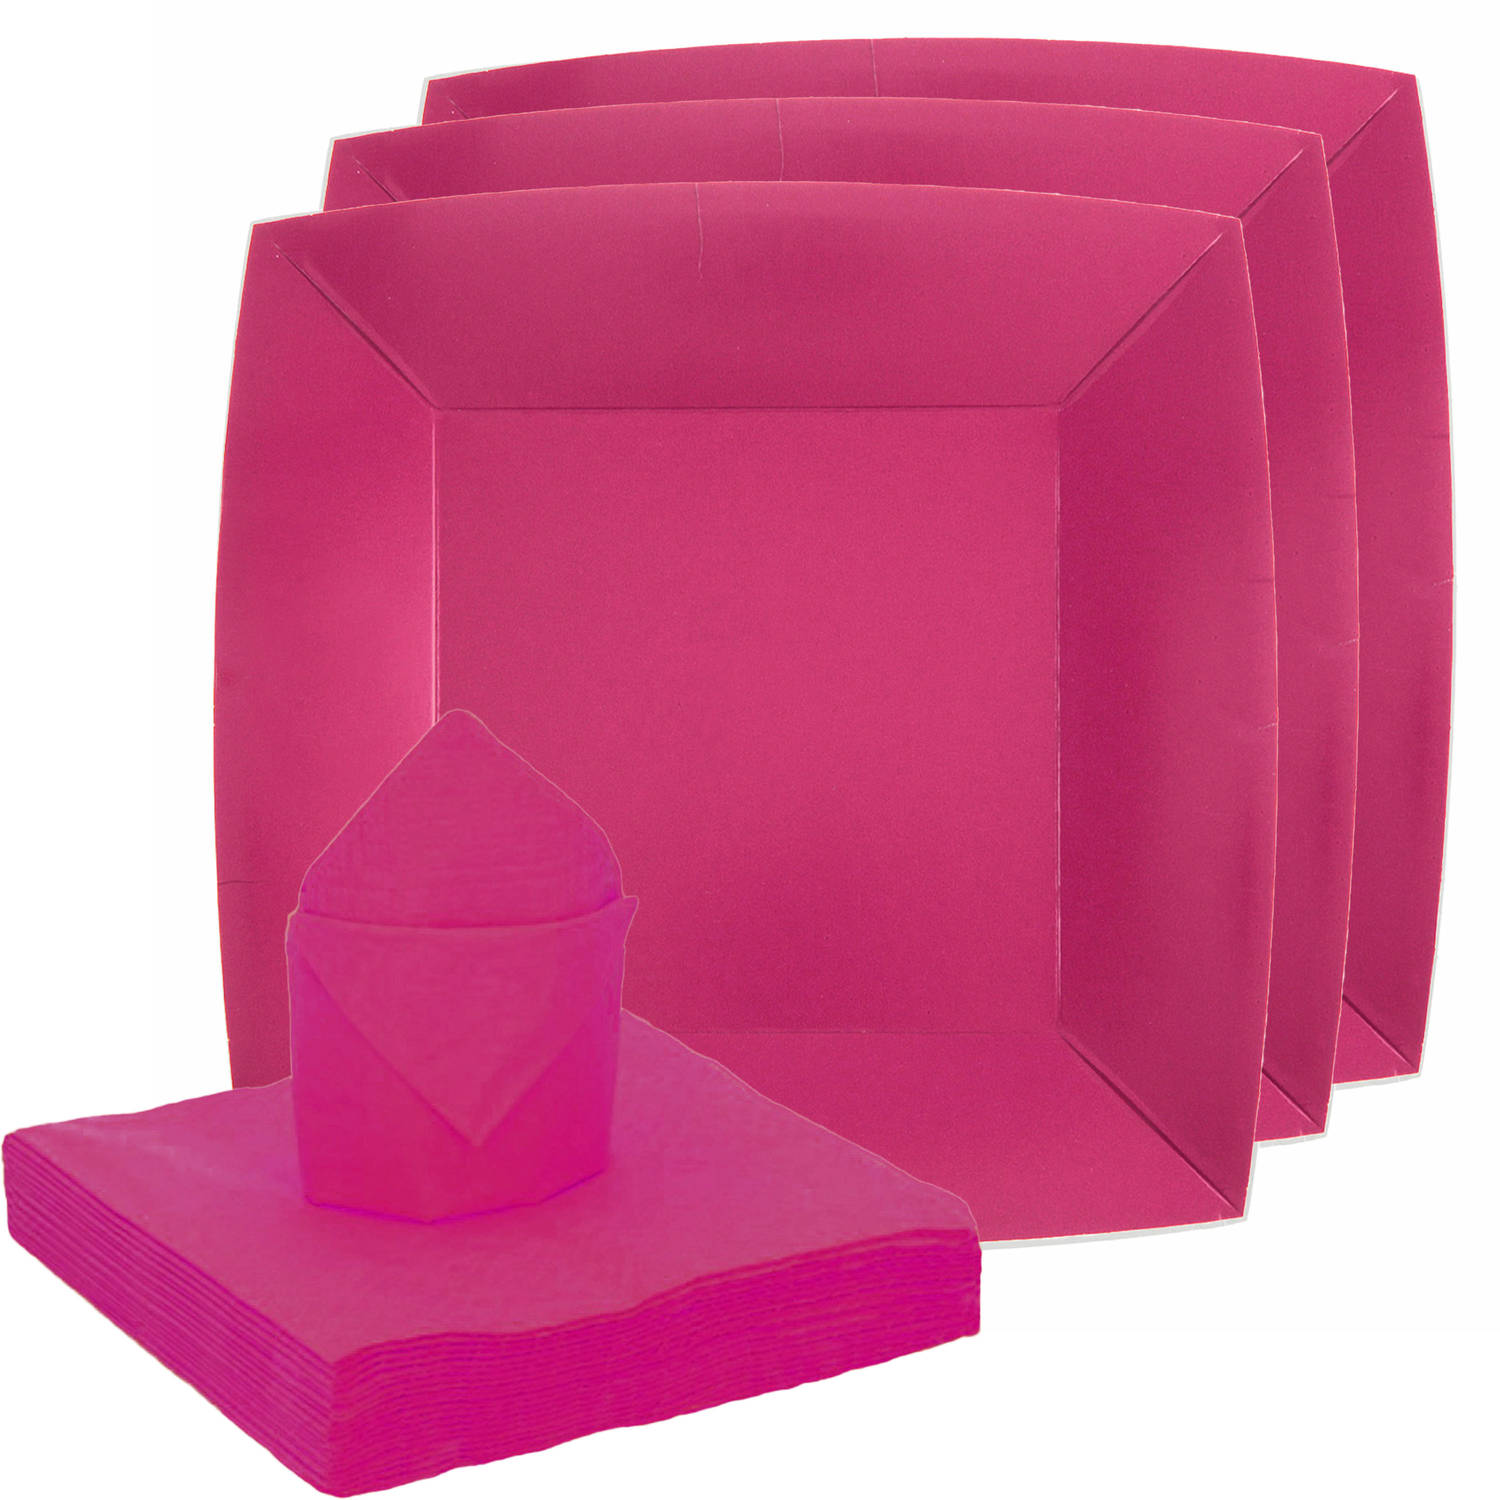 Feest-verjaardag servies set 20x bordjes-25x servetten fuchsia roze karton Feestbordjes